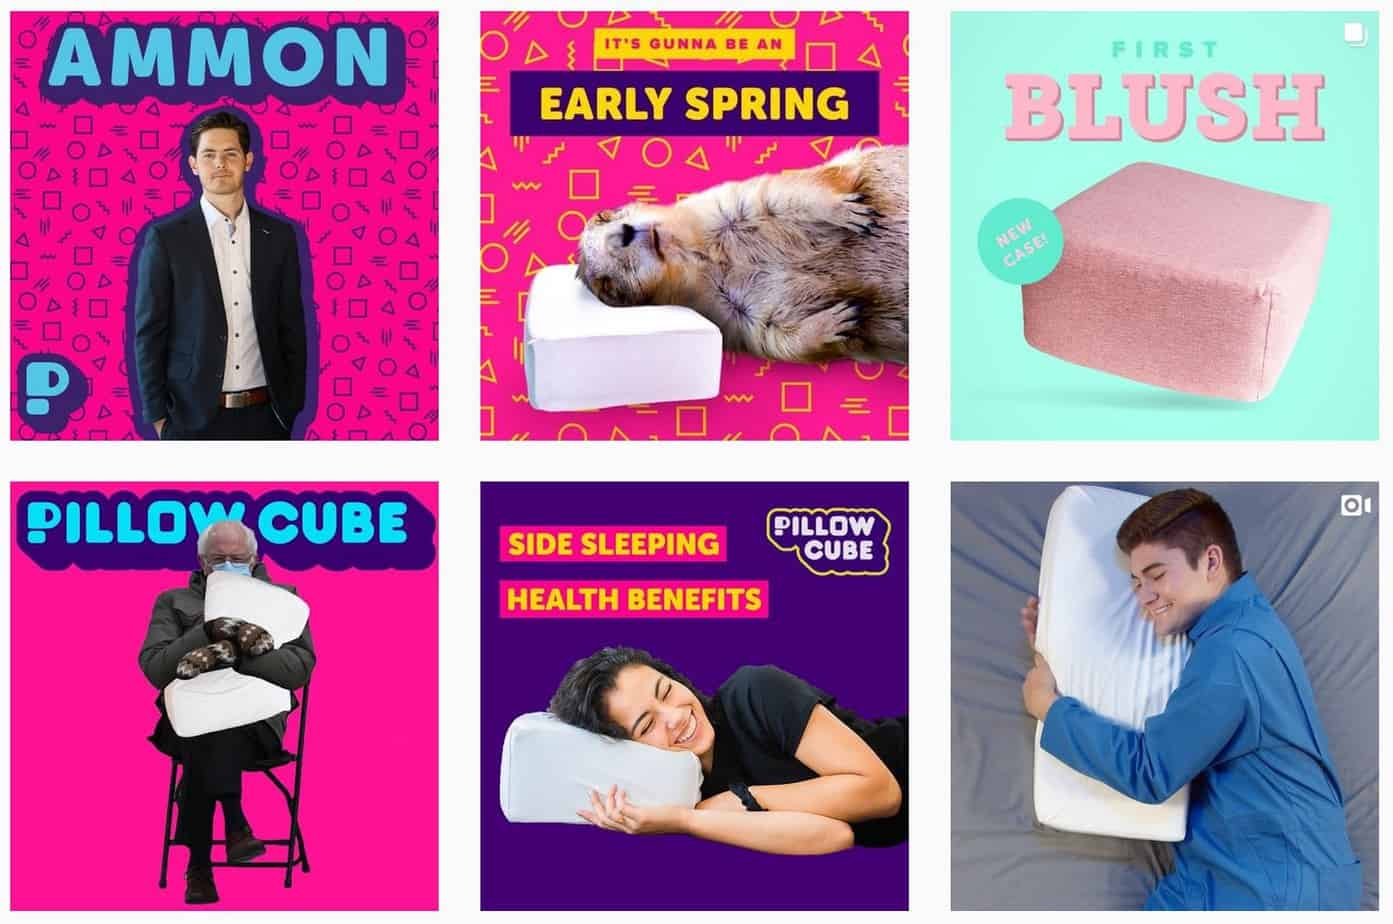 Pillow Cube | Instagram posts promoting comfort